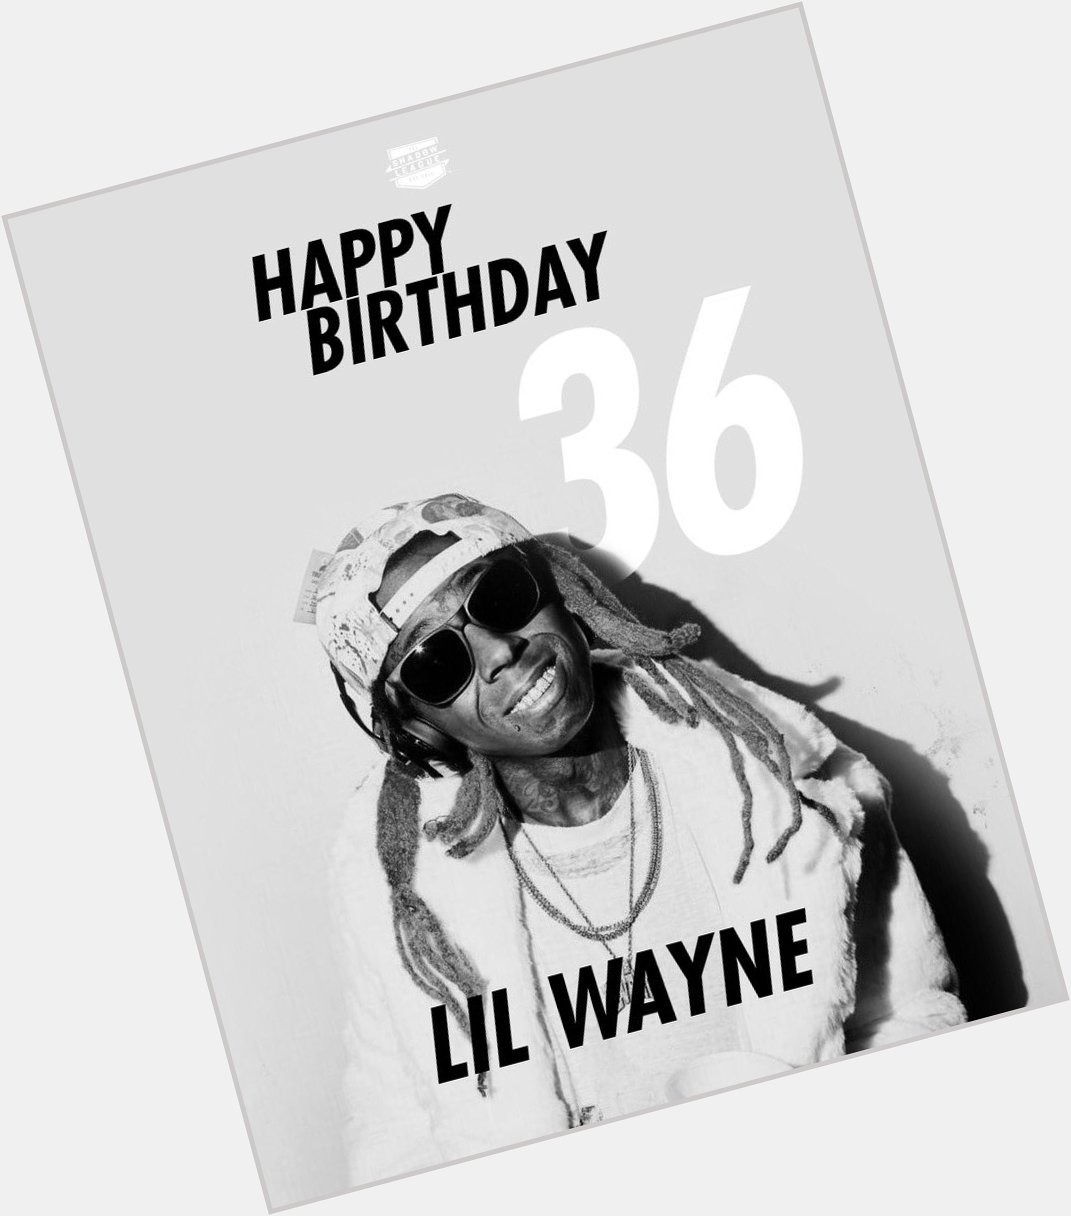 Happy 36th Birthday to Lil Wayne! 